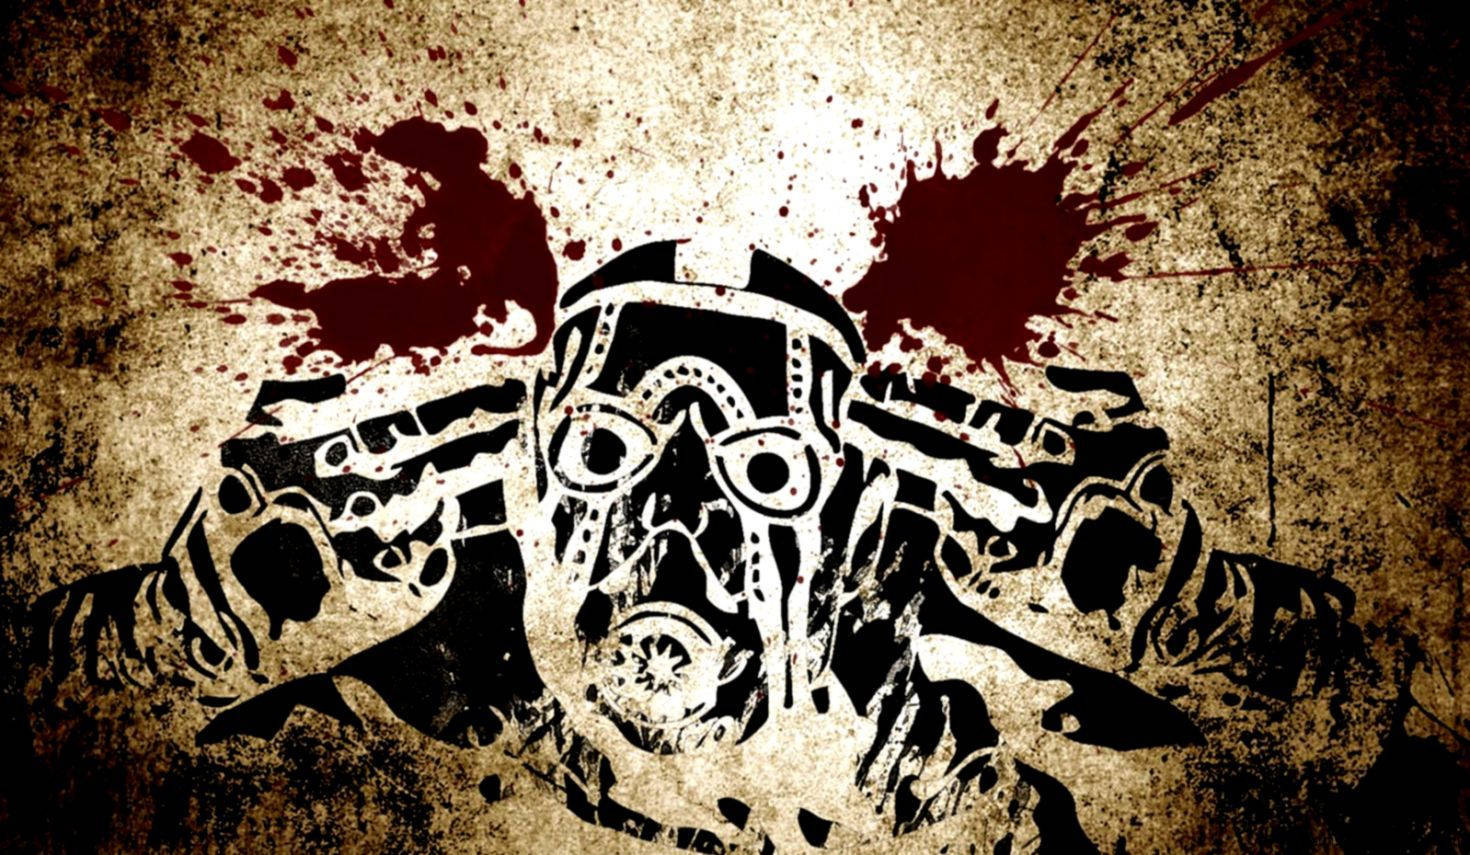 "The Grunge Psycho of Borderlands" Wallpaper